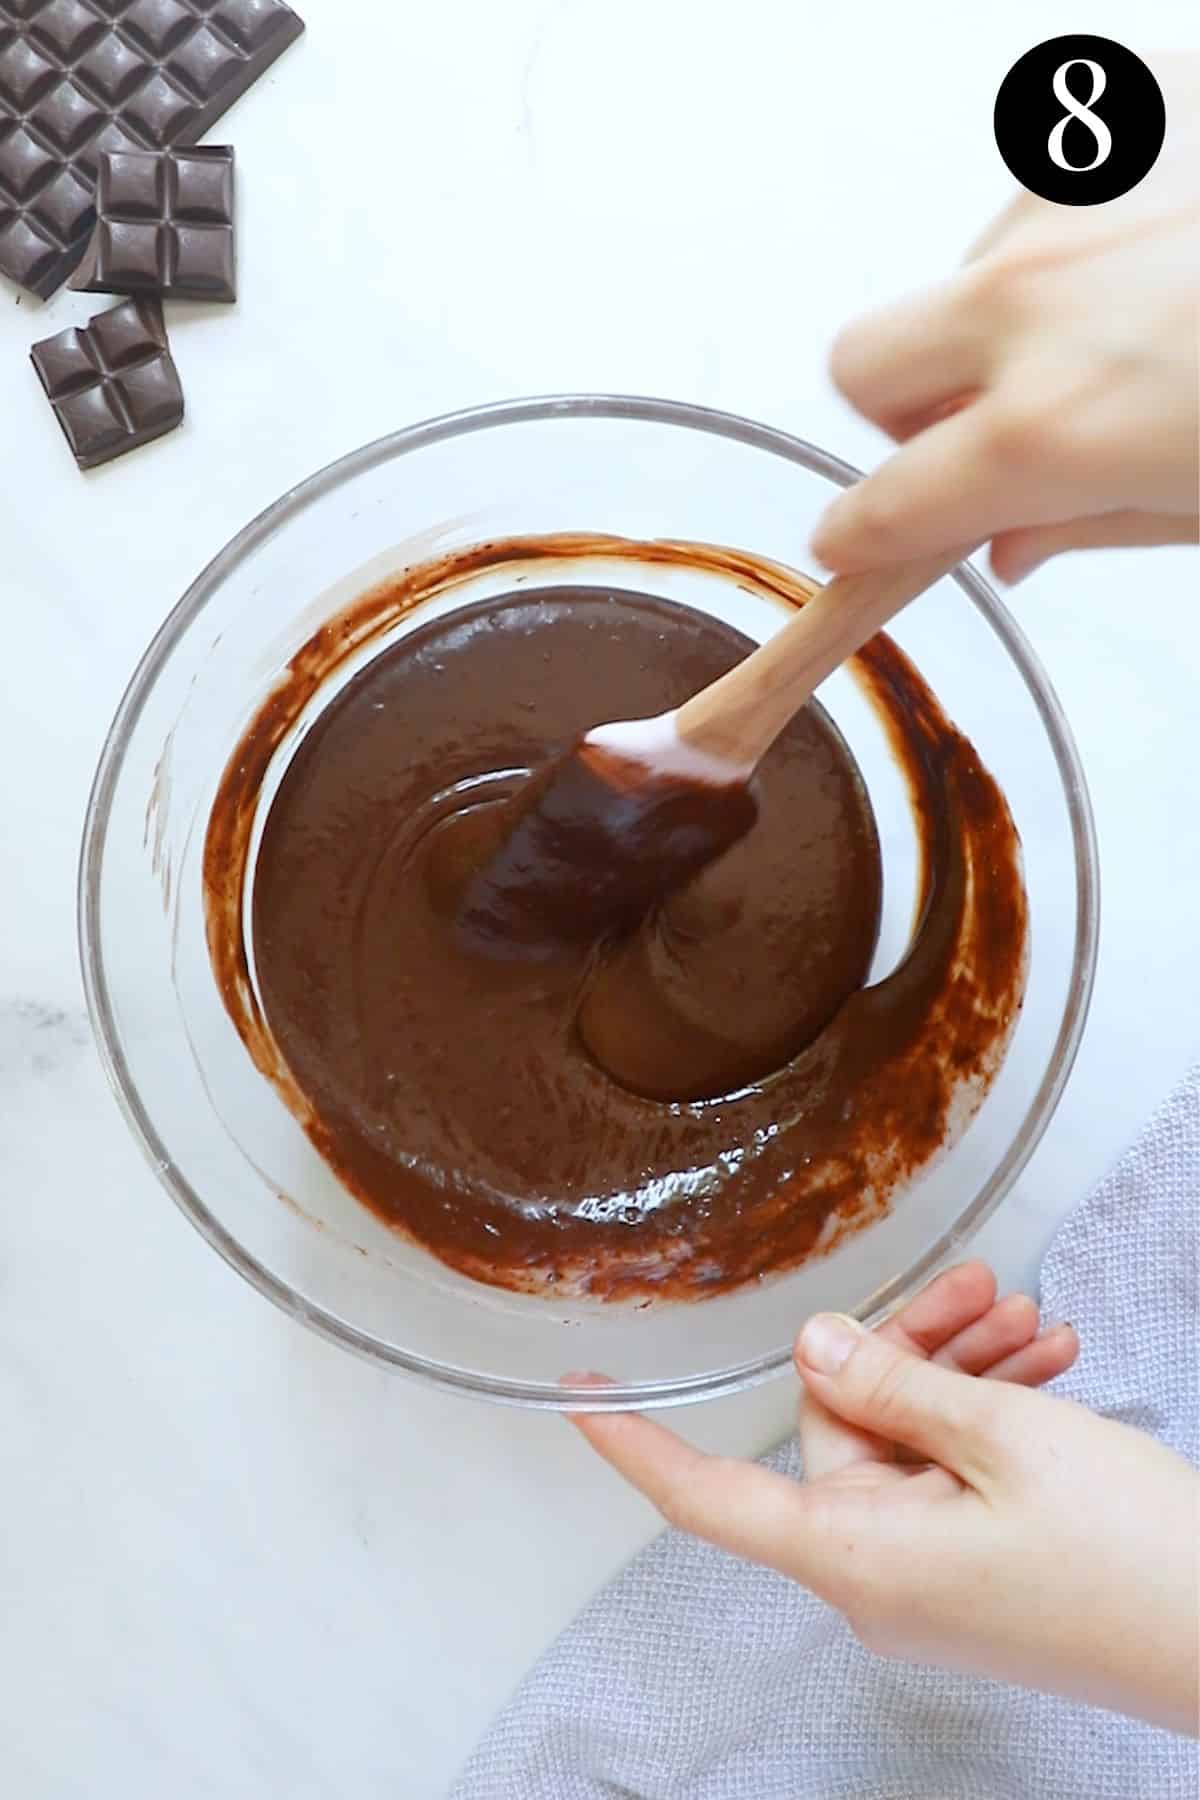 hands stirring chocolate ganache in a glass bowl.